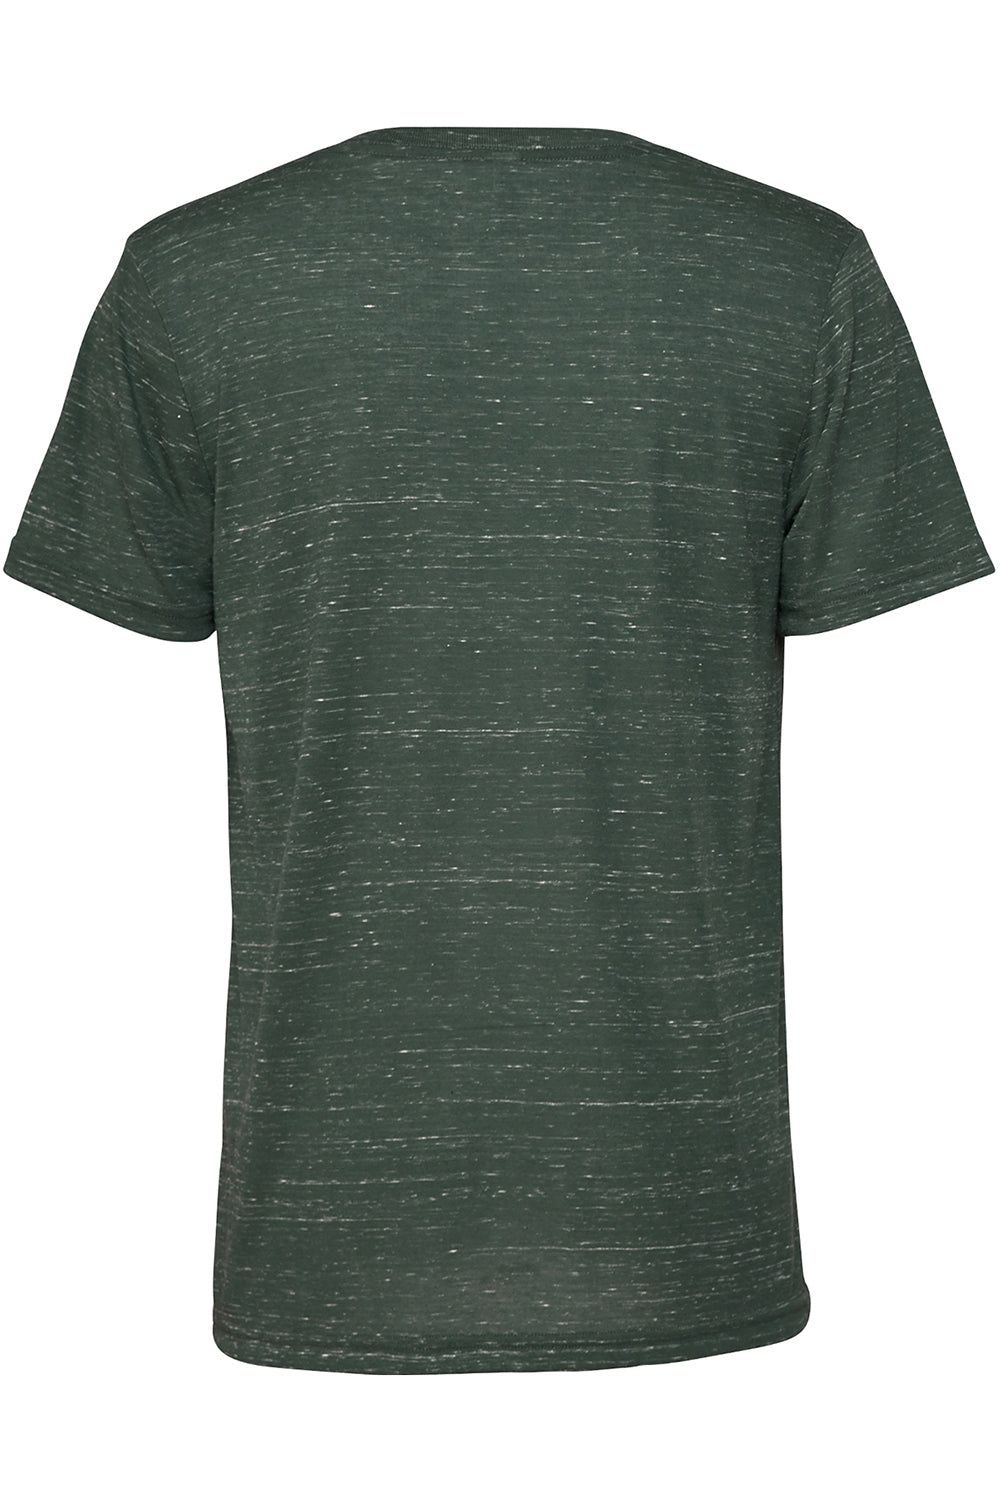 Bella + Canvas BC3005/3005/3655C Mens Jersey Short Sleeve V-Neck T-Shirt Forest Green Marble Flat Back